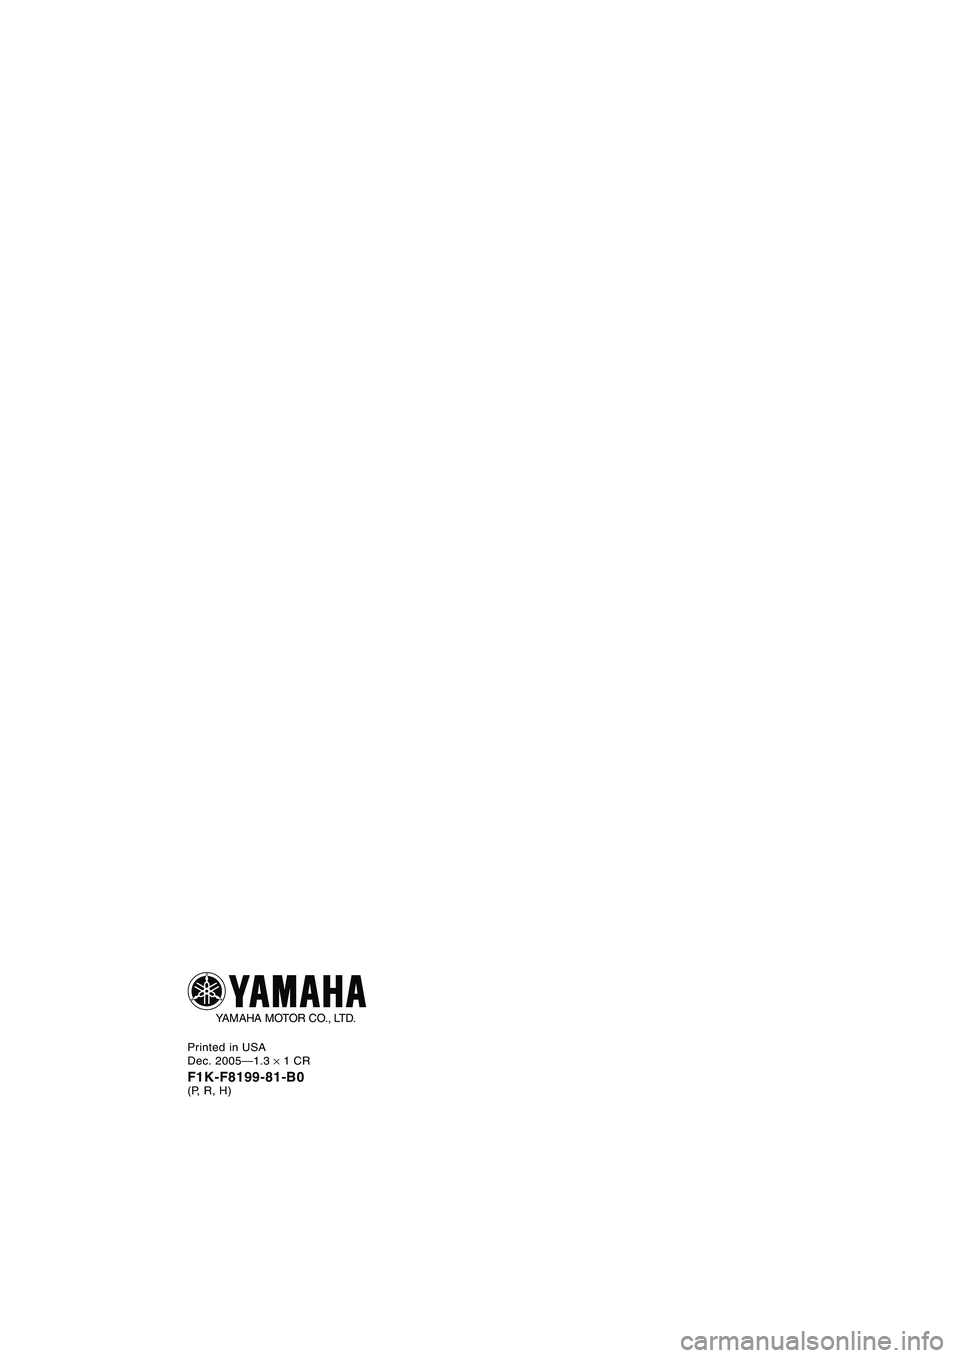 YAMAHA VX 2006  Manual de utilização (in Portuguese) Printed in USA
Dec. 2005—1.3 × 1 CR
F1K-F8199-81-B0(P, R, H)
YAMAHA MOTOR CO., LTD.
B_F1K80.book  Page 1  Monday, October 24, 2005  2:31 PM 